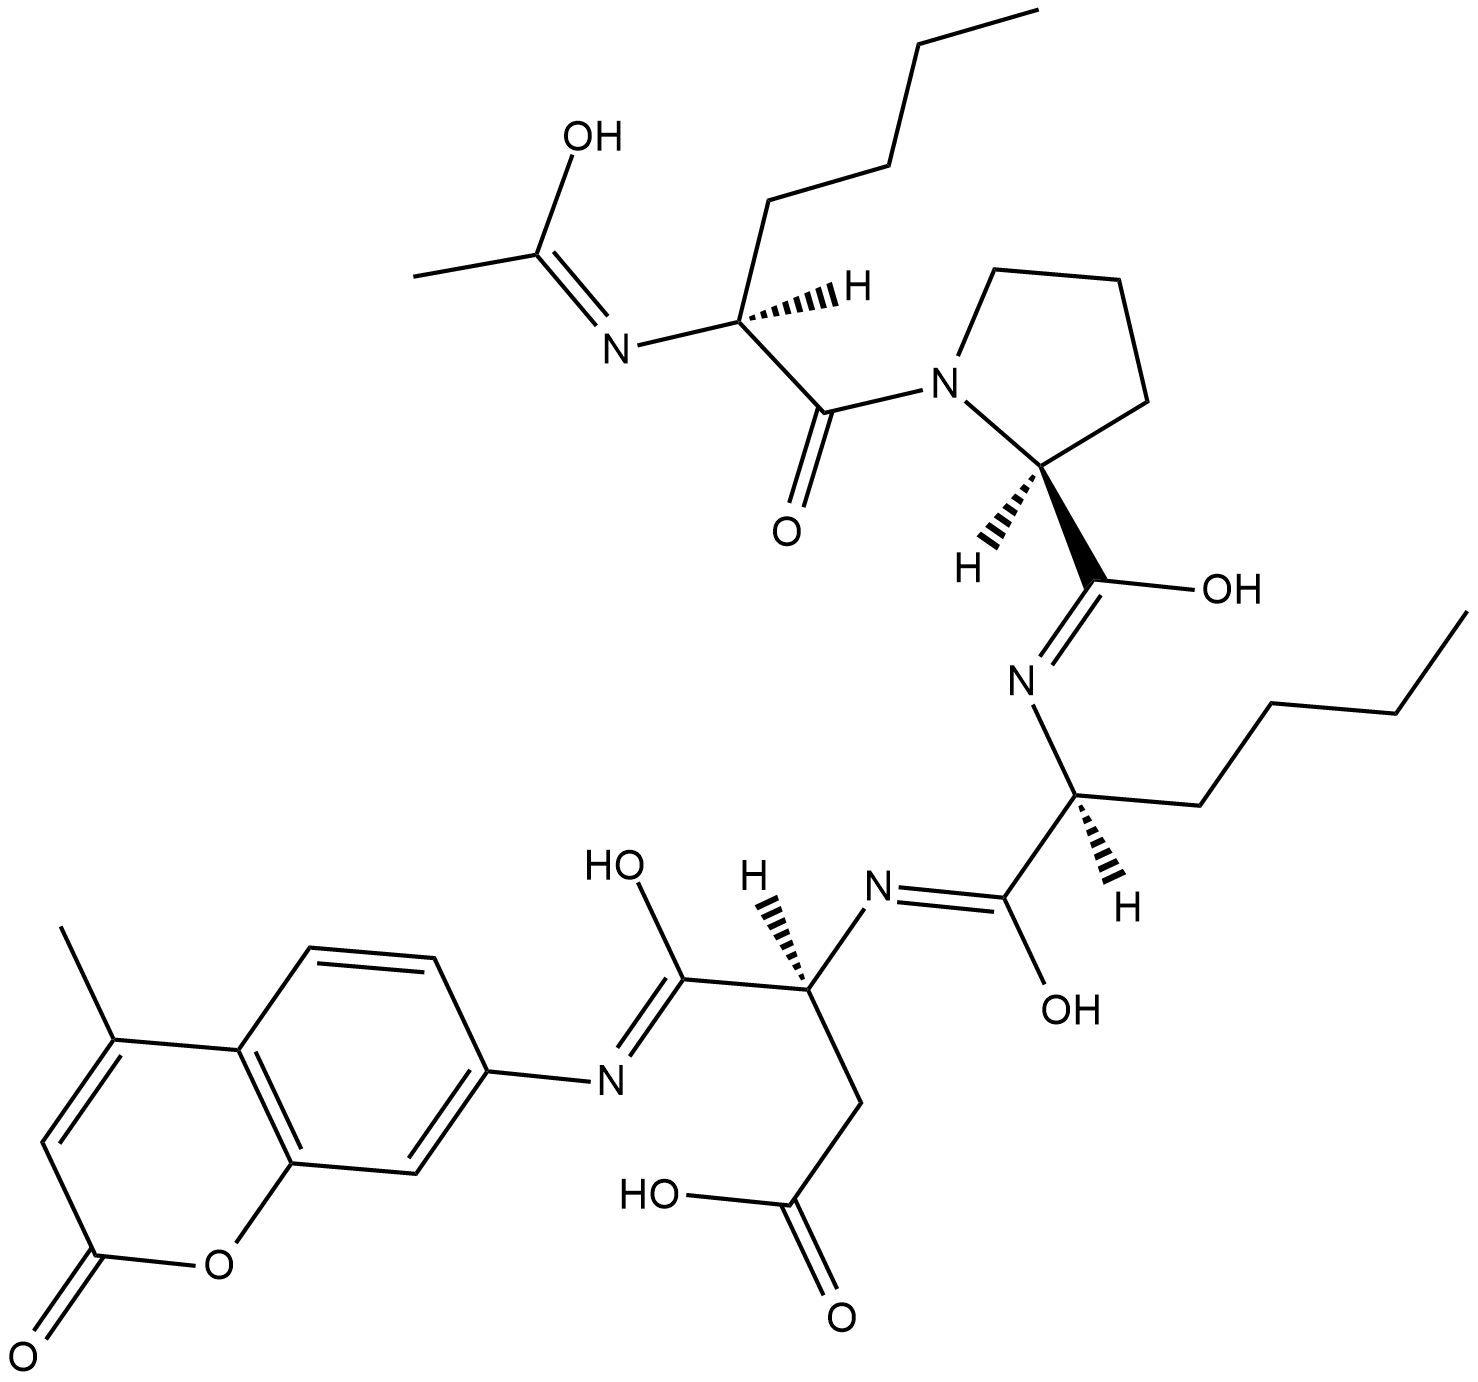 Ac-Nle-Pro-Nle-Asp-AMC Chemical Structure